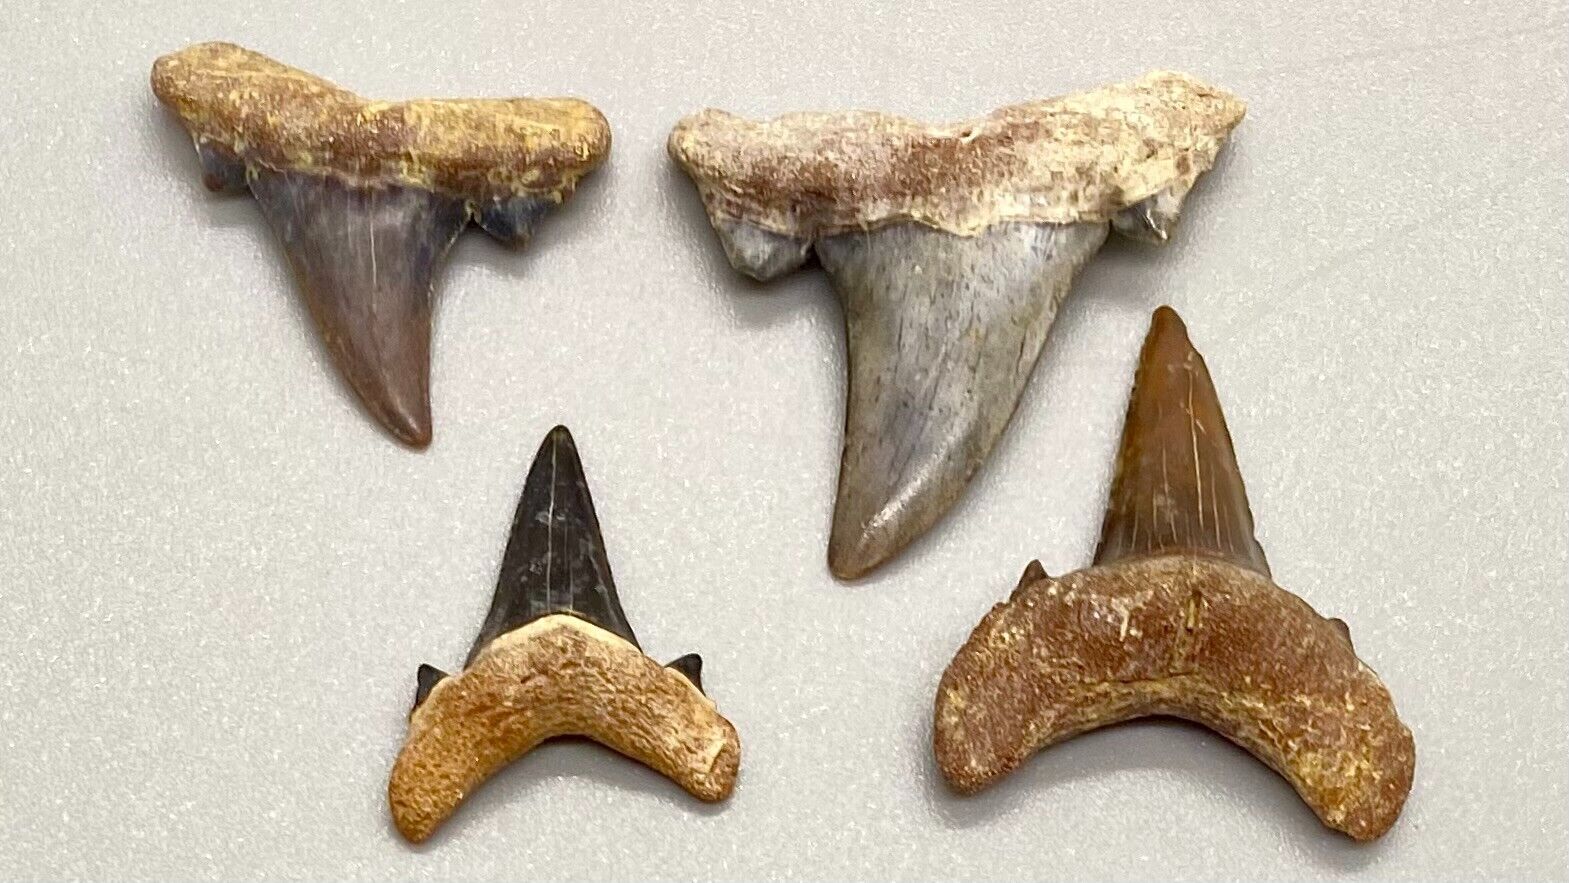 Group of 4 COLORFUL Fossil EXTINCT MACKEREL Shark Teeth - Western Sahara